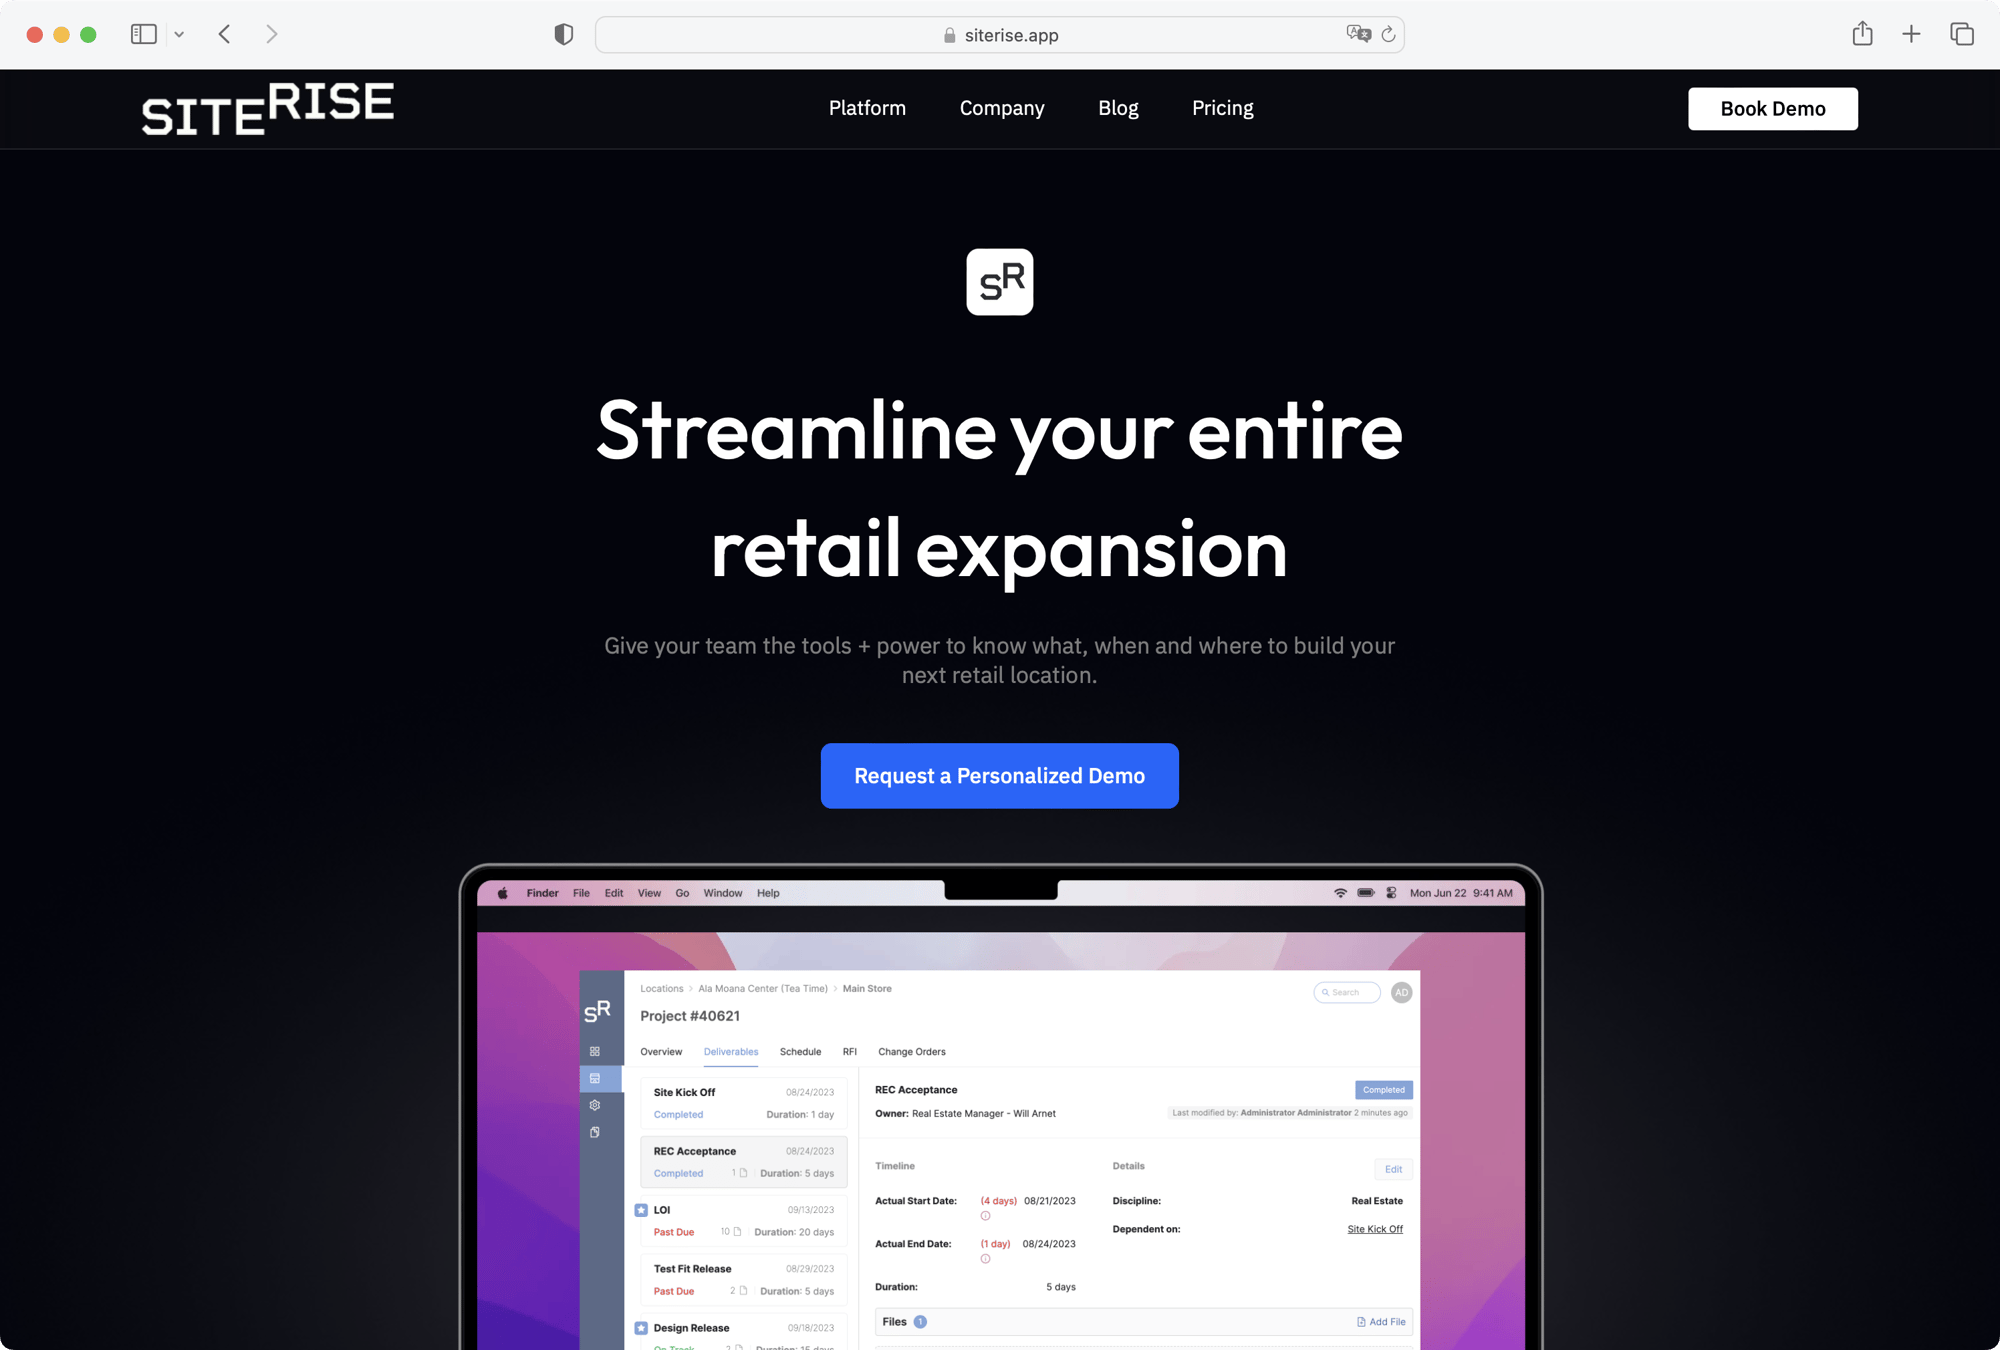 Siterise.app website featuring their platform